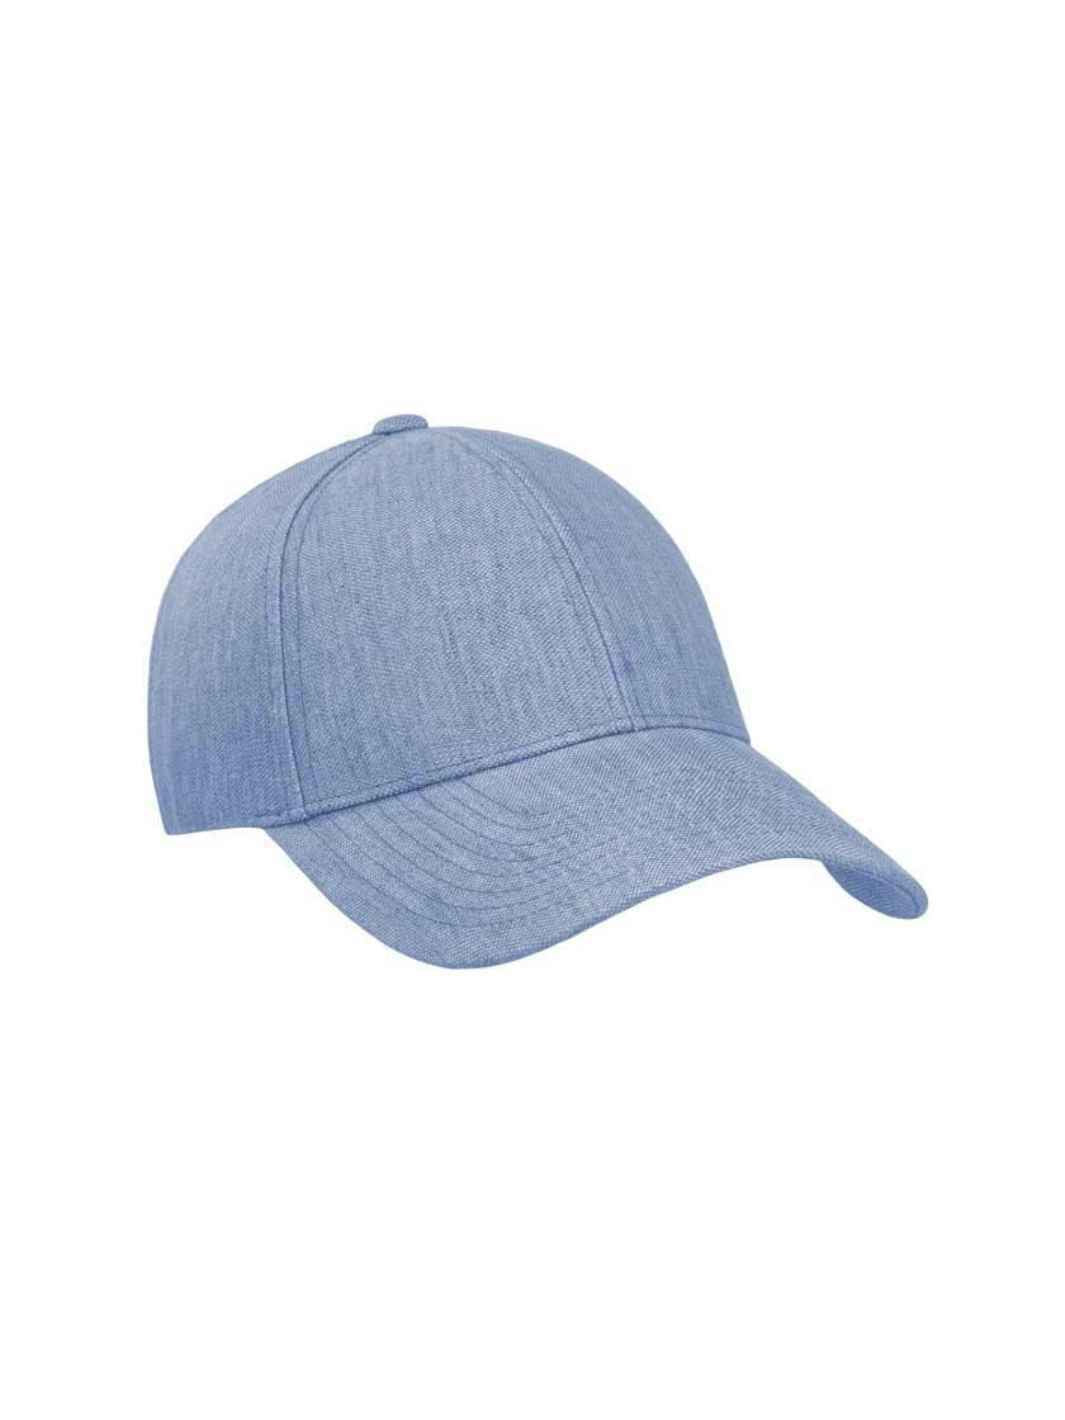 Varsity Headwear Accessories Cap | Azure Blue Linen